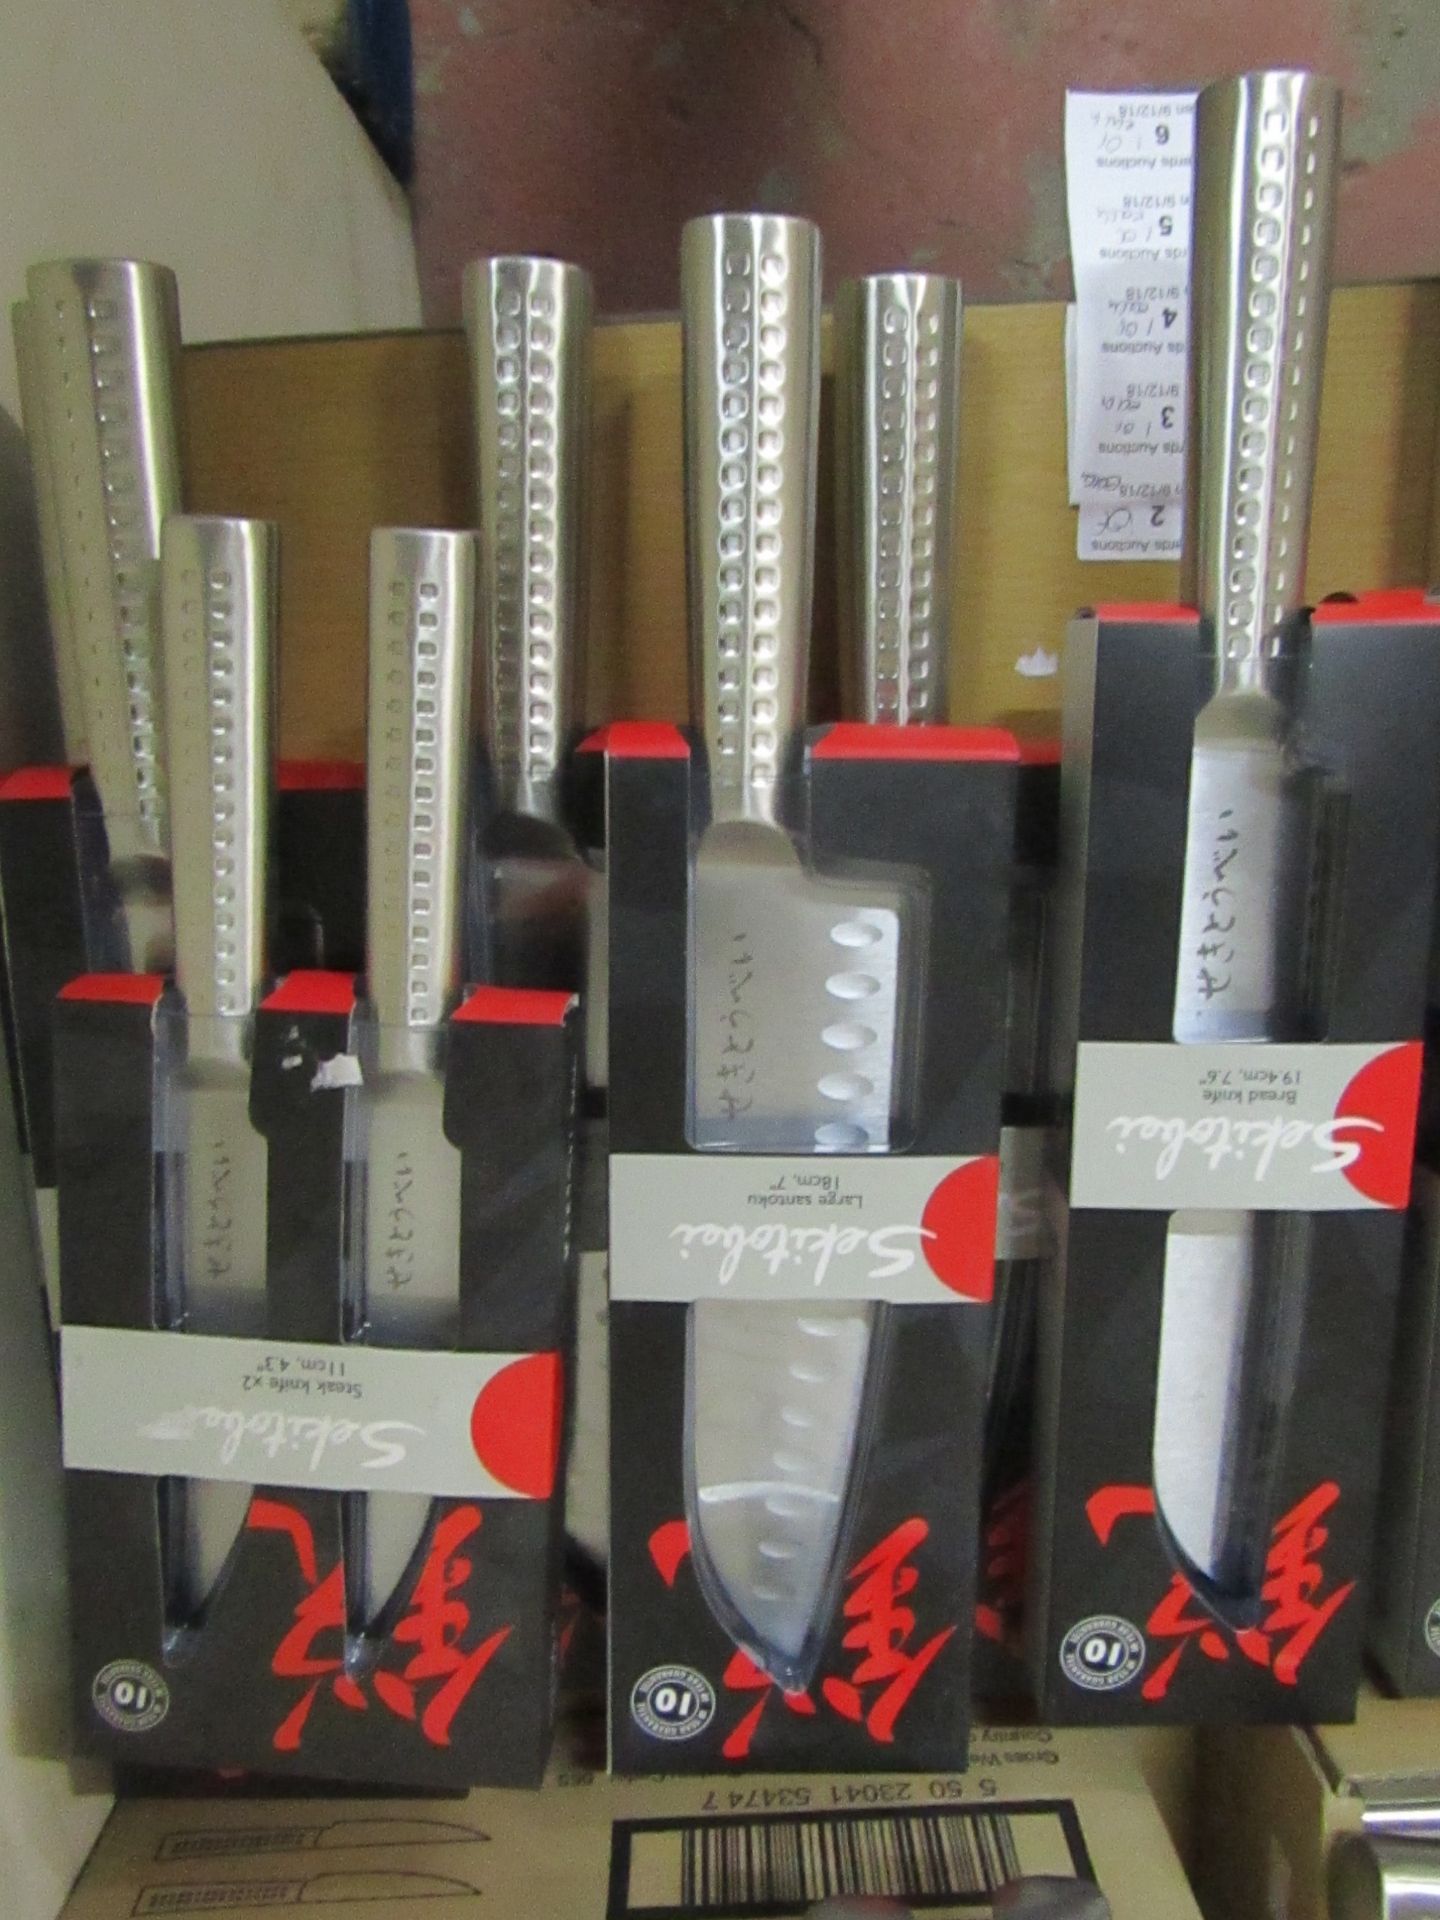 Set of 4x knives being: - Sekitobei bread knife 19.4cm, new - Sekitobei large santoku knife 18cm,